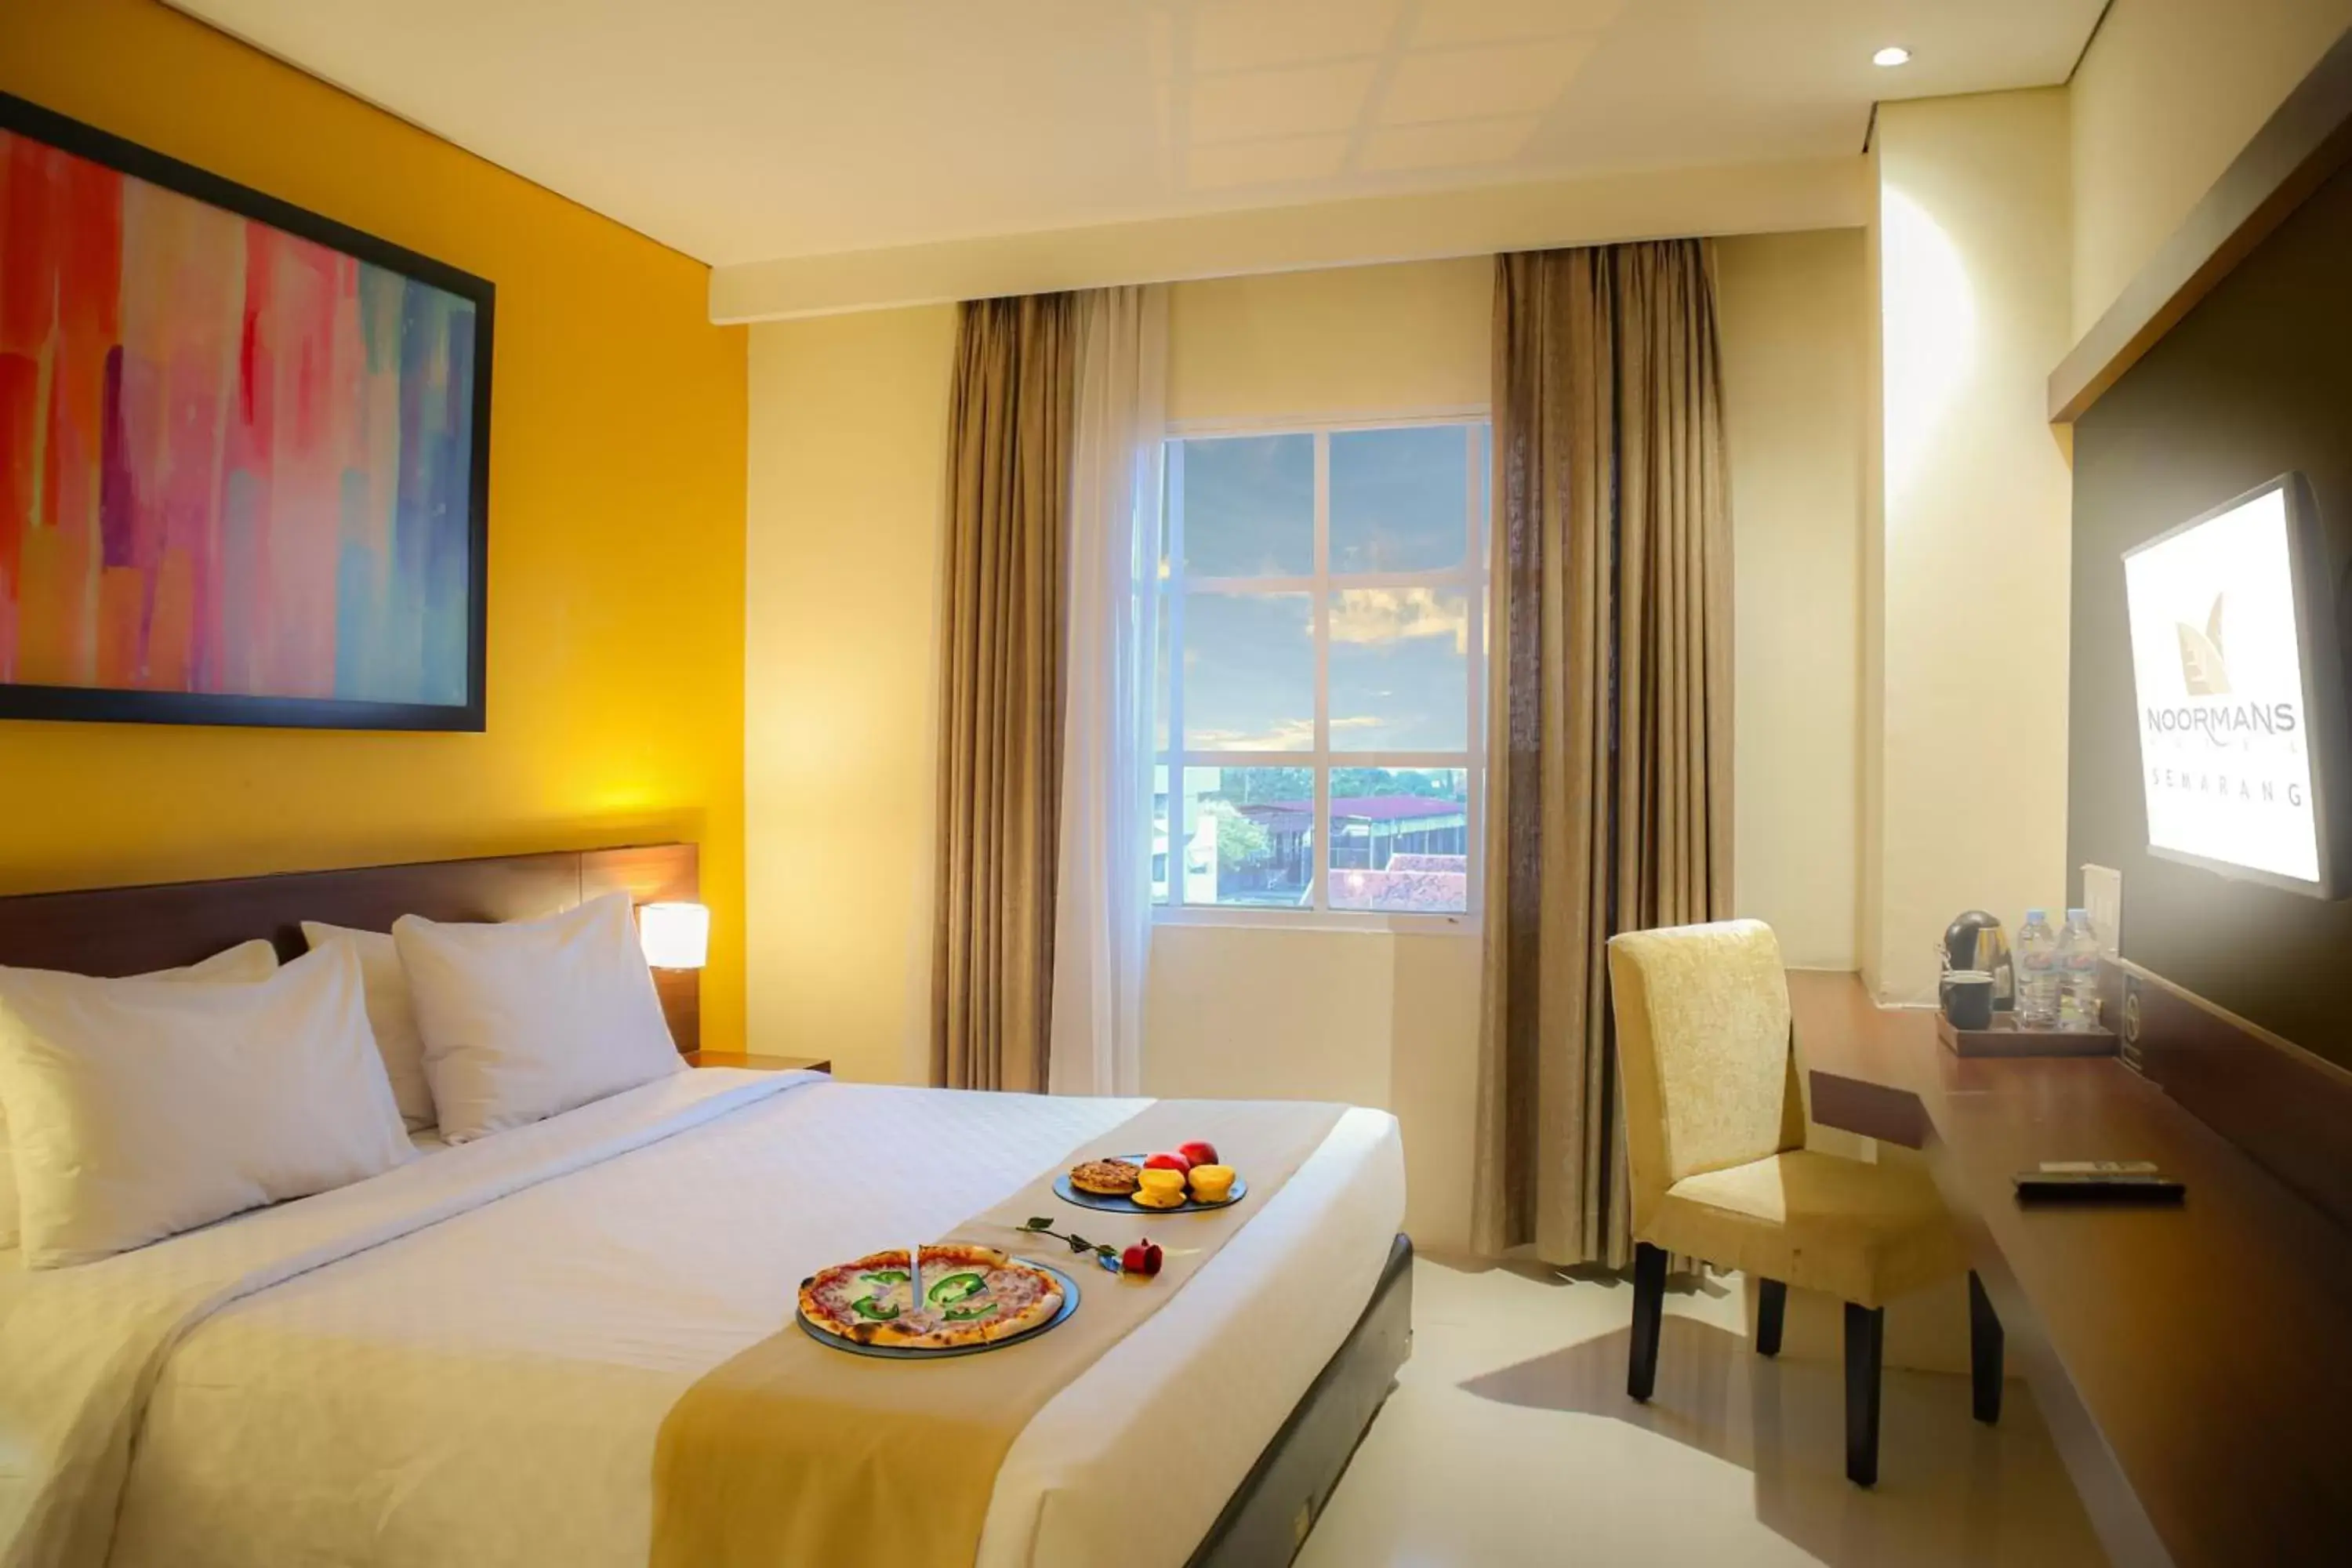 Bedroom, Bed in Noormans Hotel Semarang